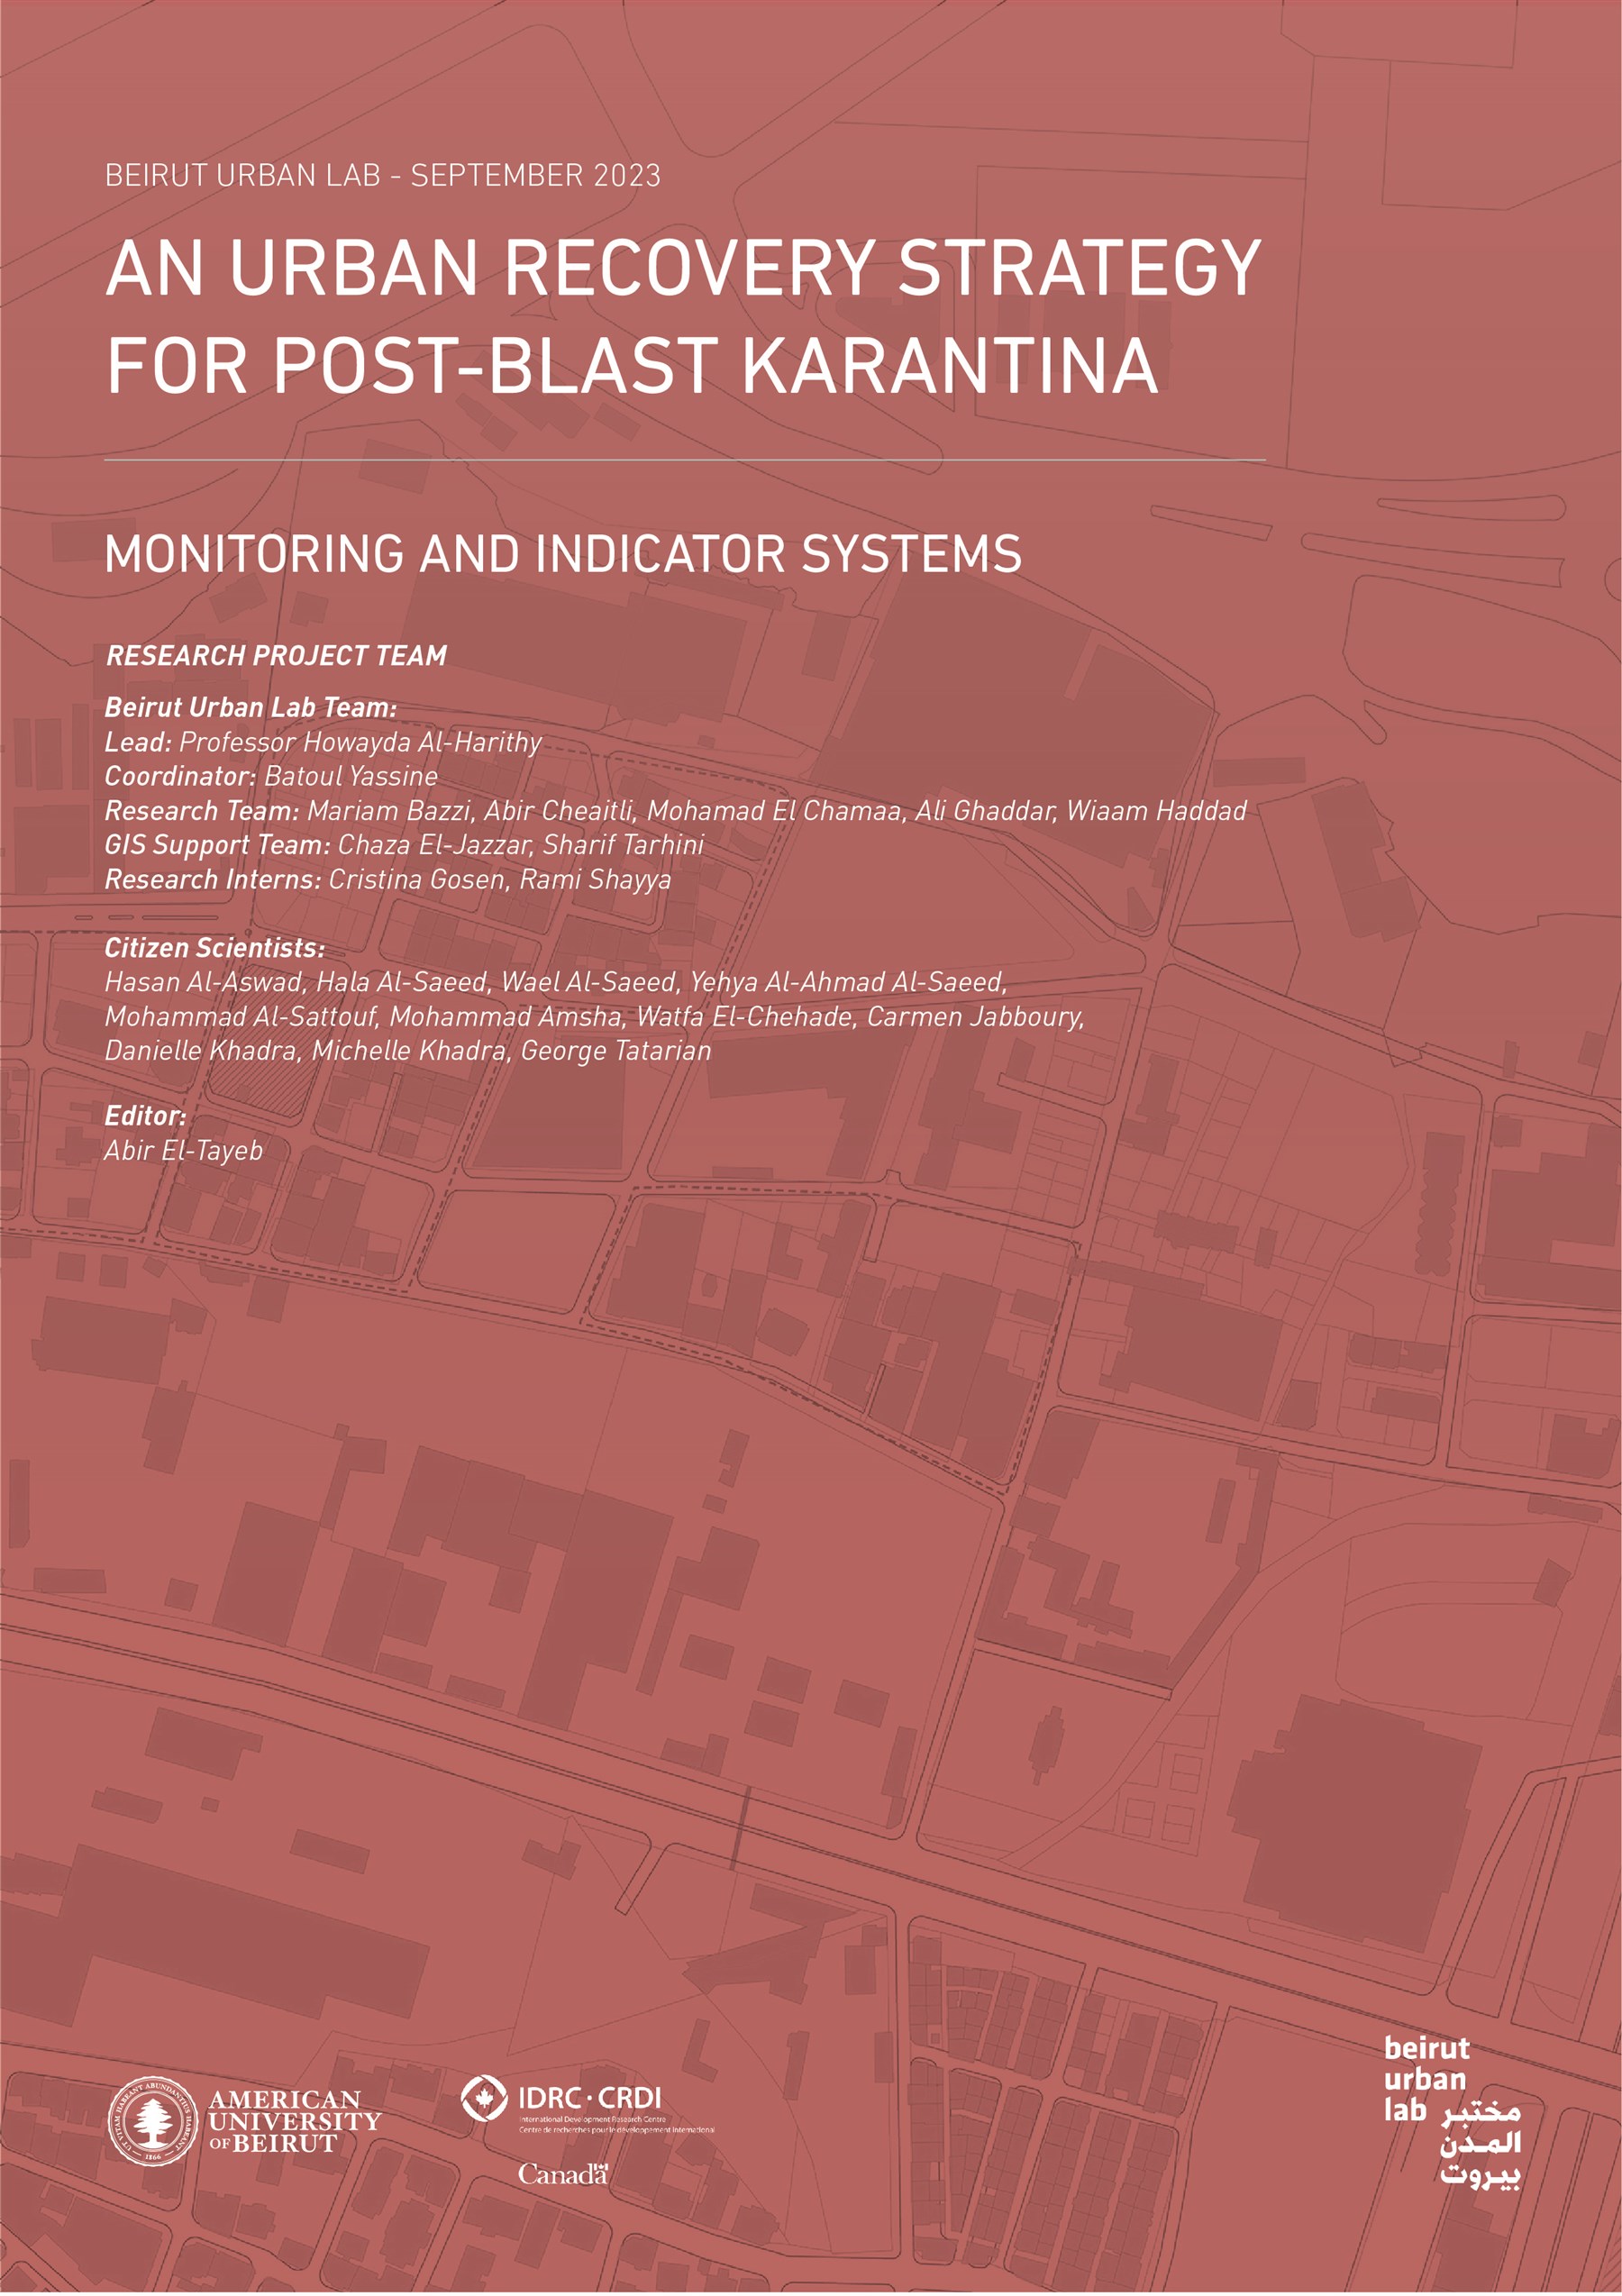 An Urban Recovery Strategy for Post-Blast Karantina